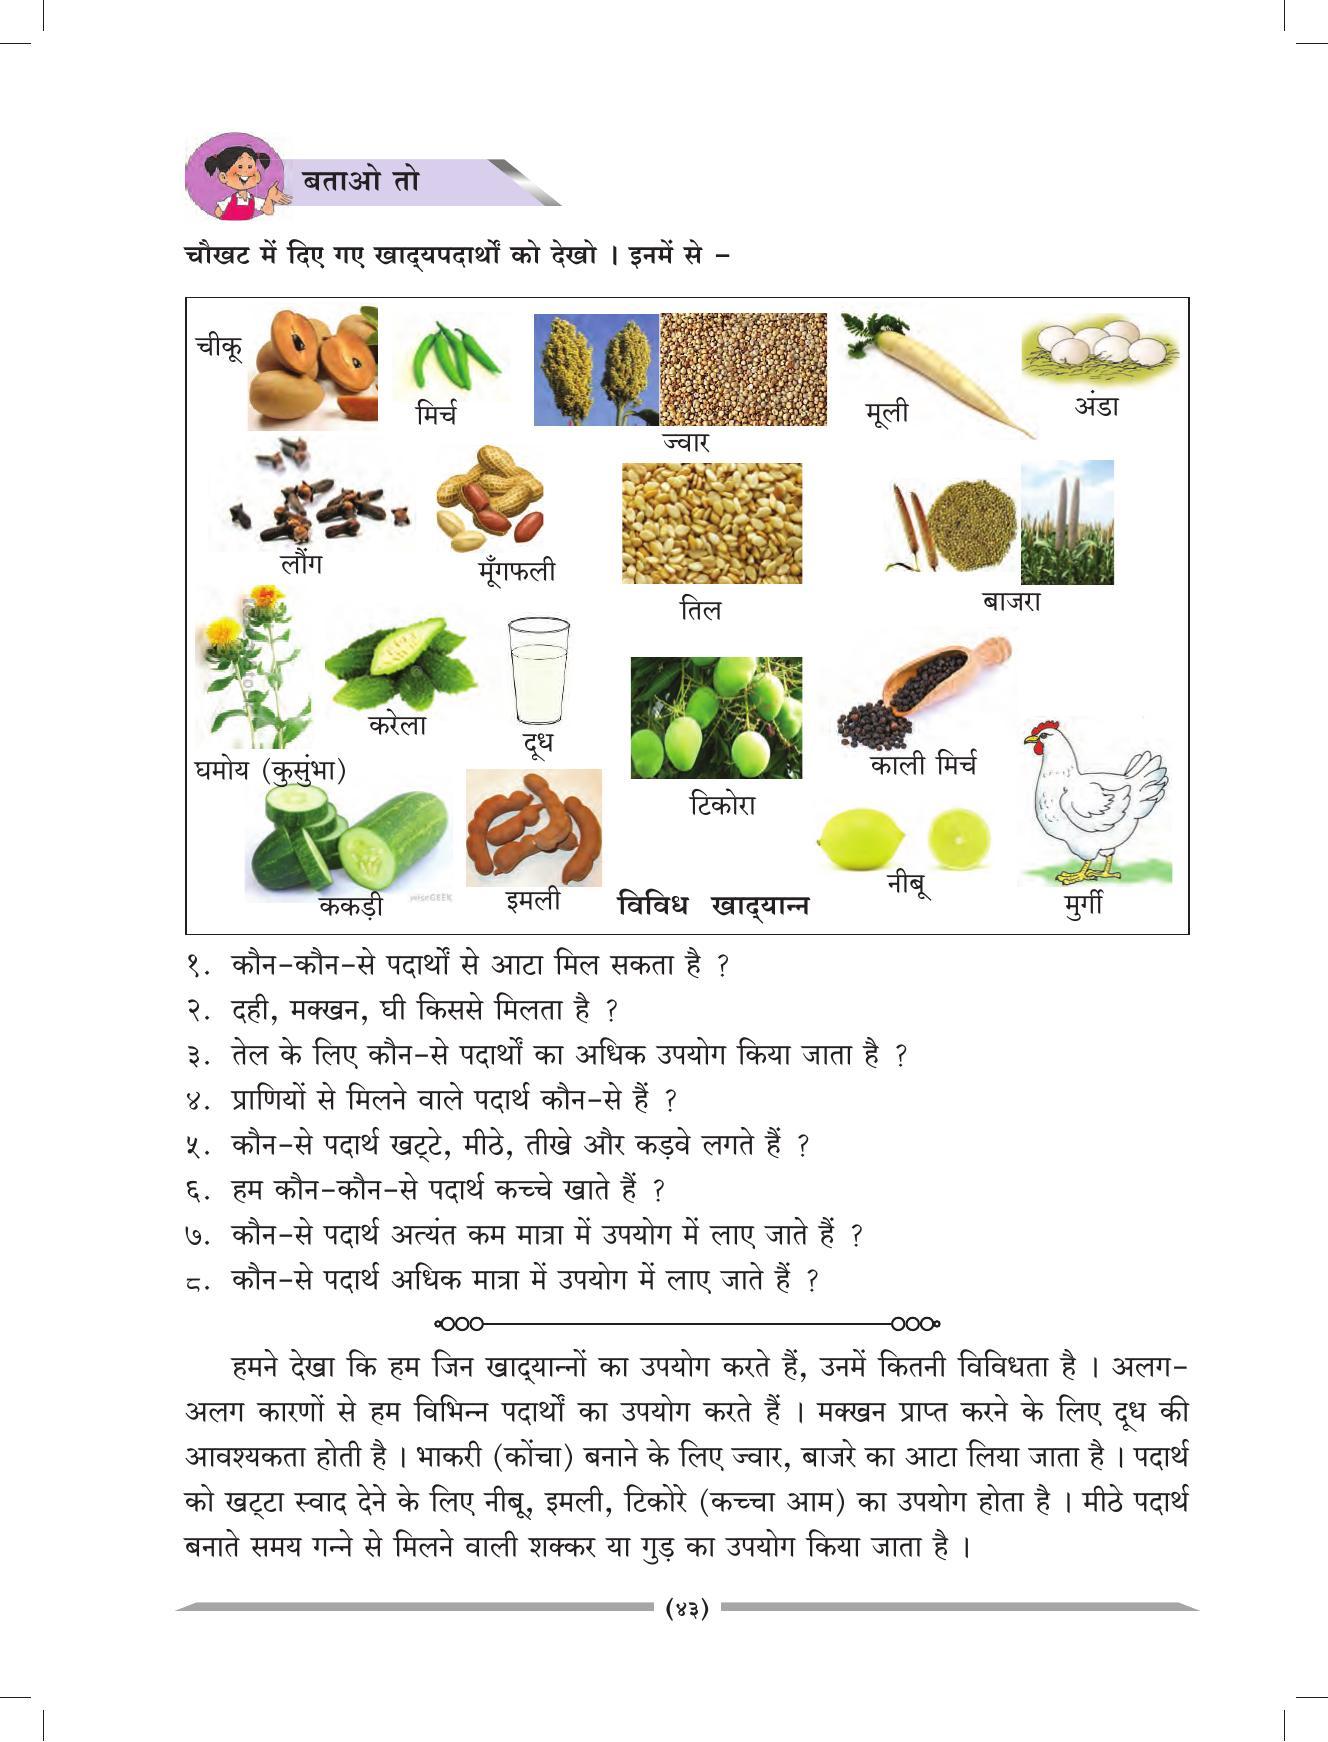 Maharashtra Board Class 4 EVS 1 (Hindi Medium) Textbook - Page 53